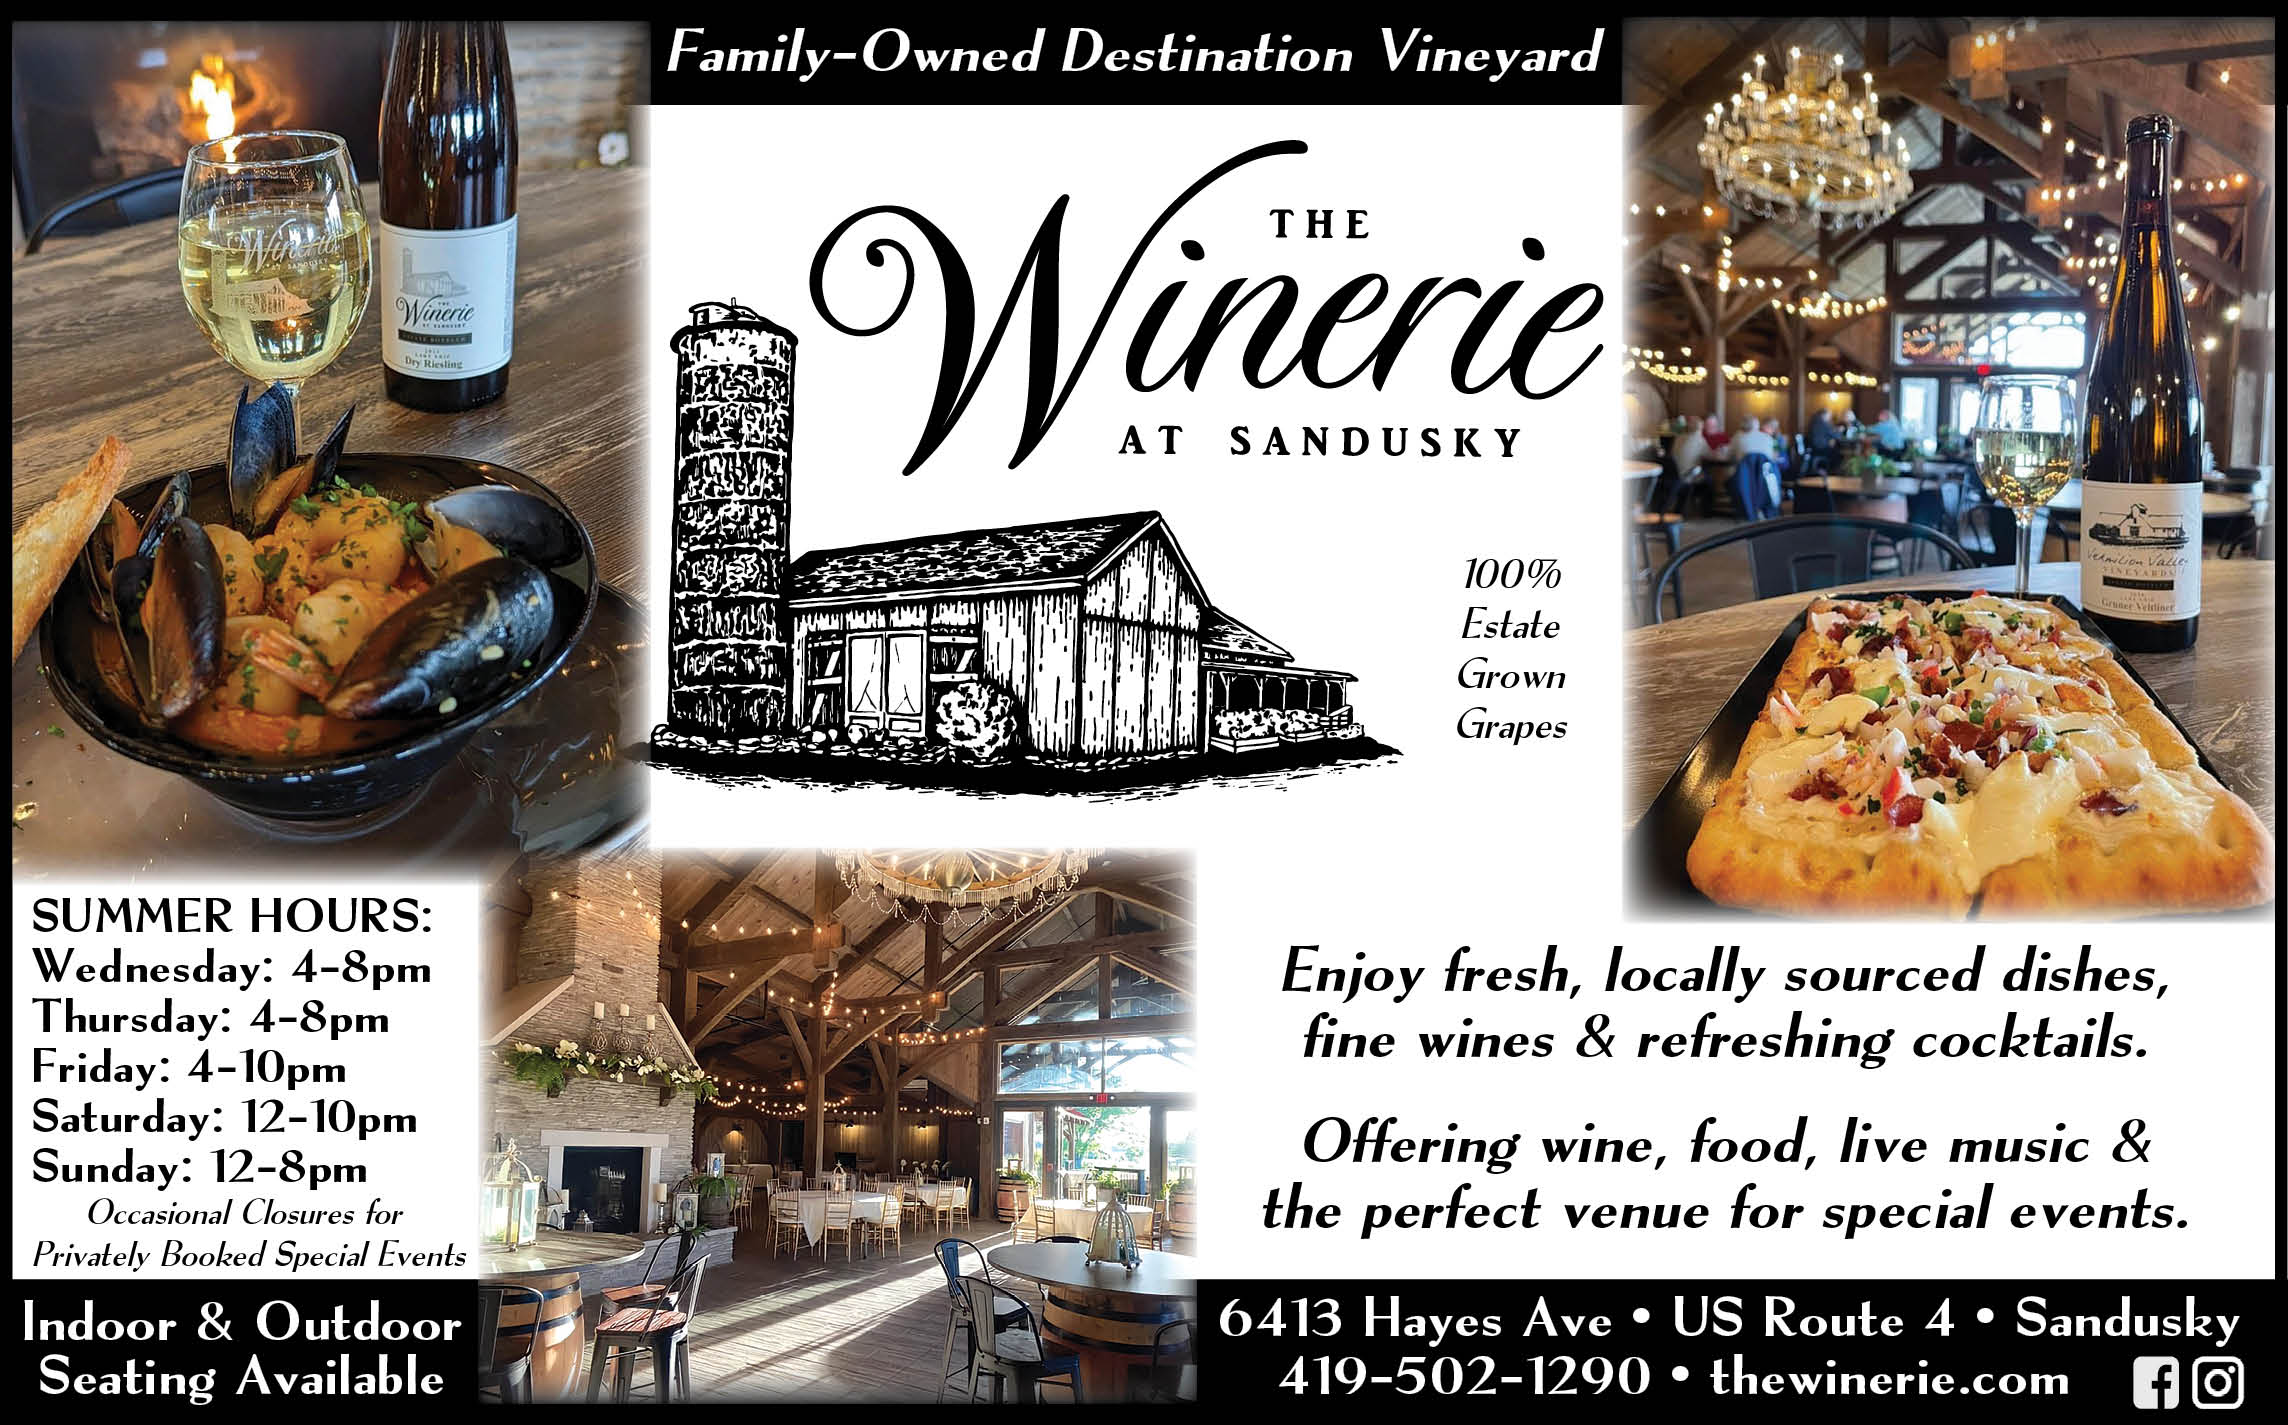 The Winerie at Sandusky